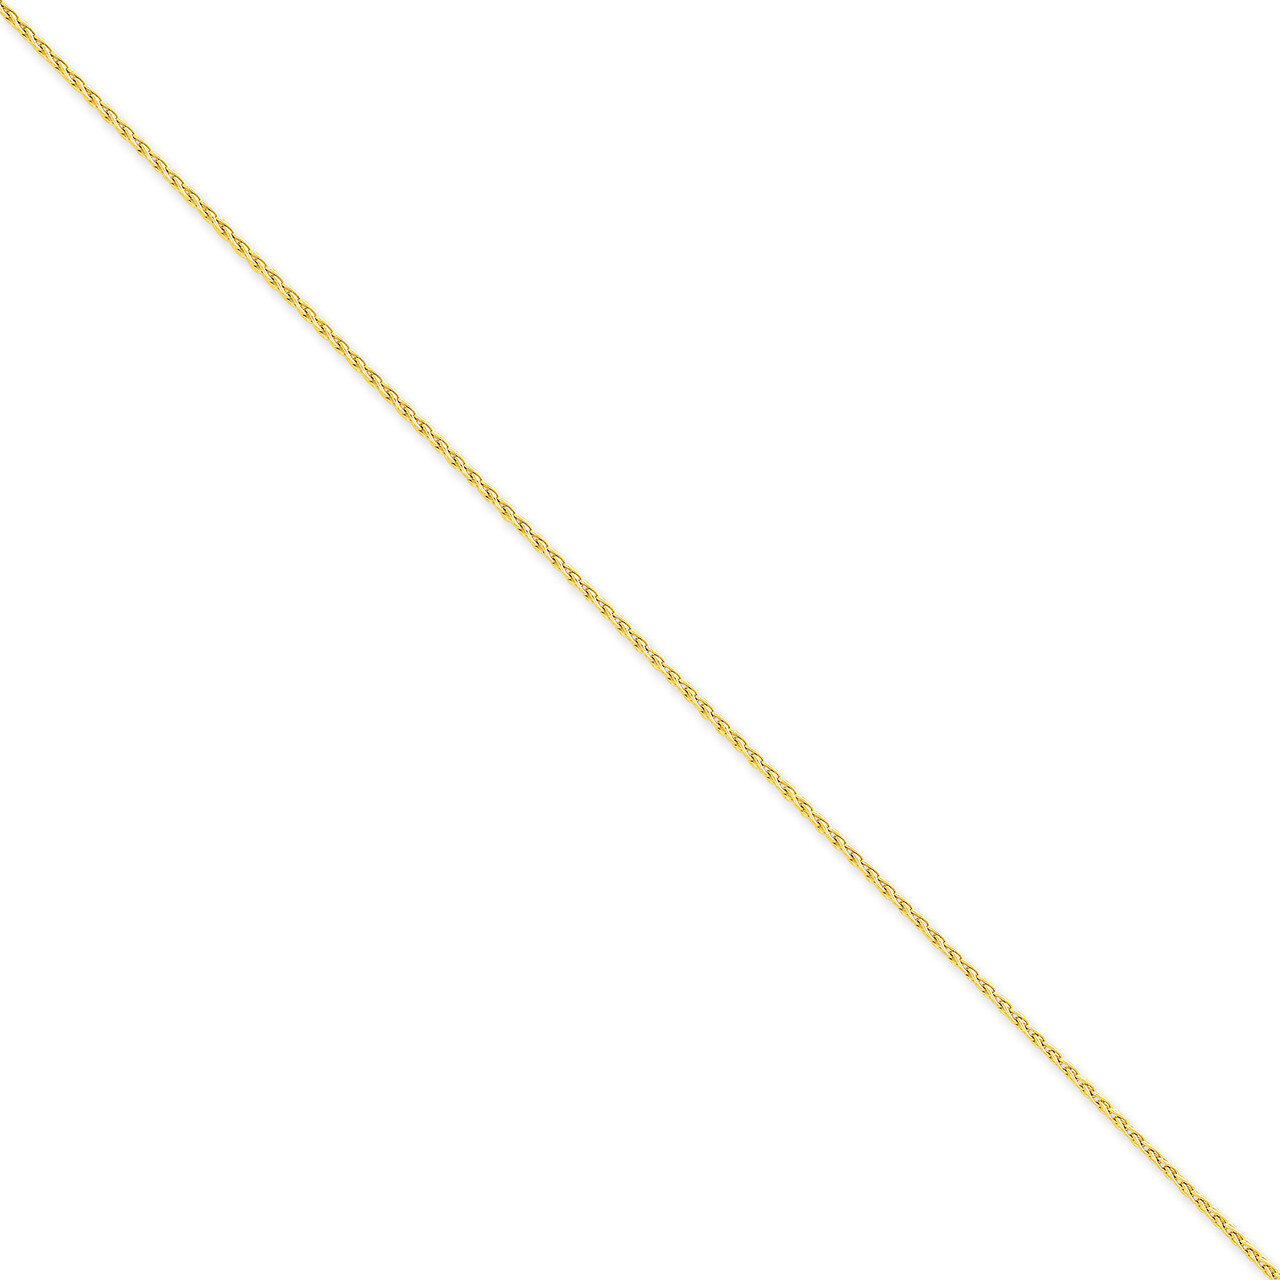 1.5mm Parisian Wheat Chain 18 Inch 14k Gold PEN266-18